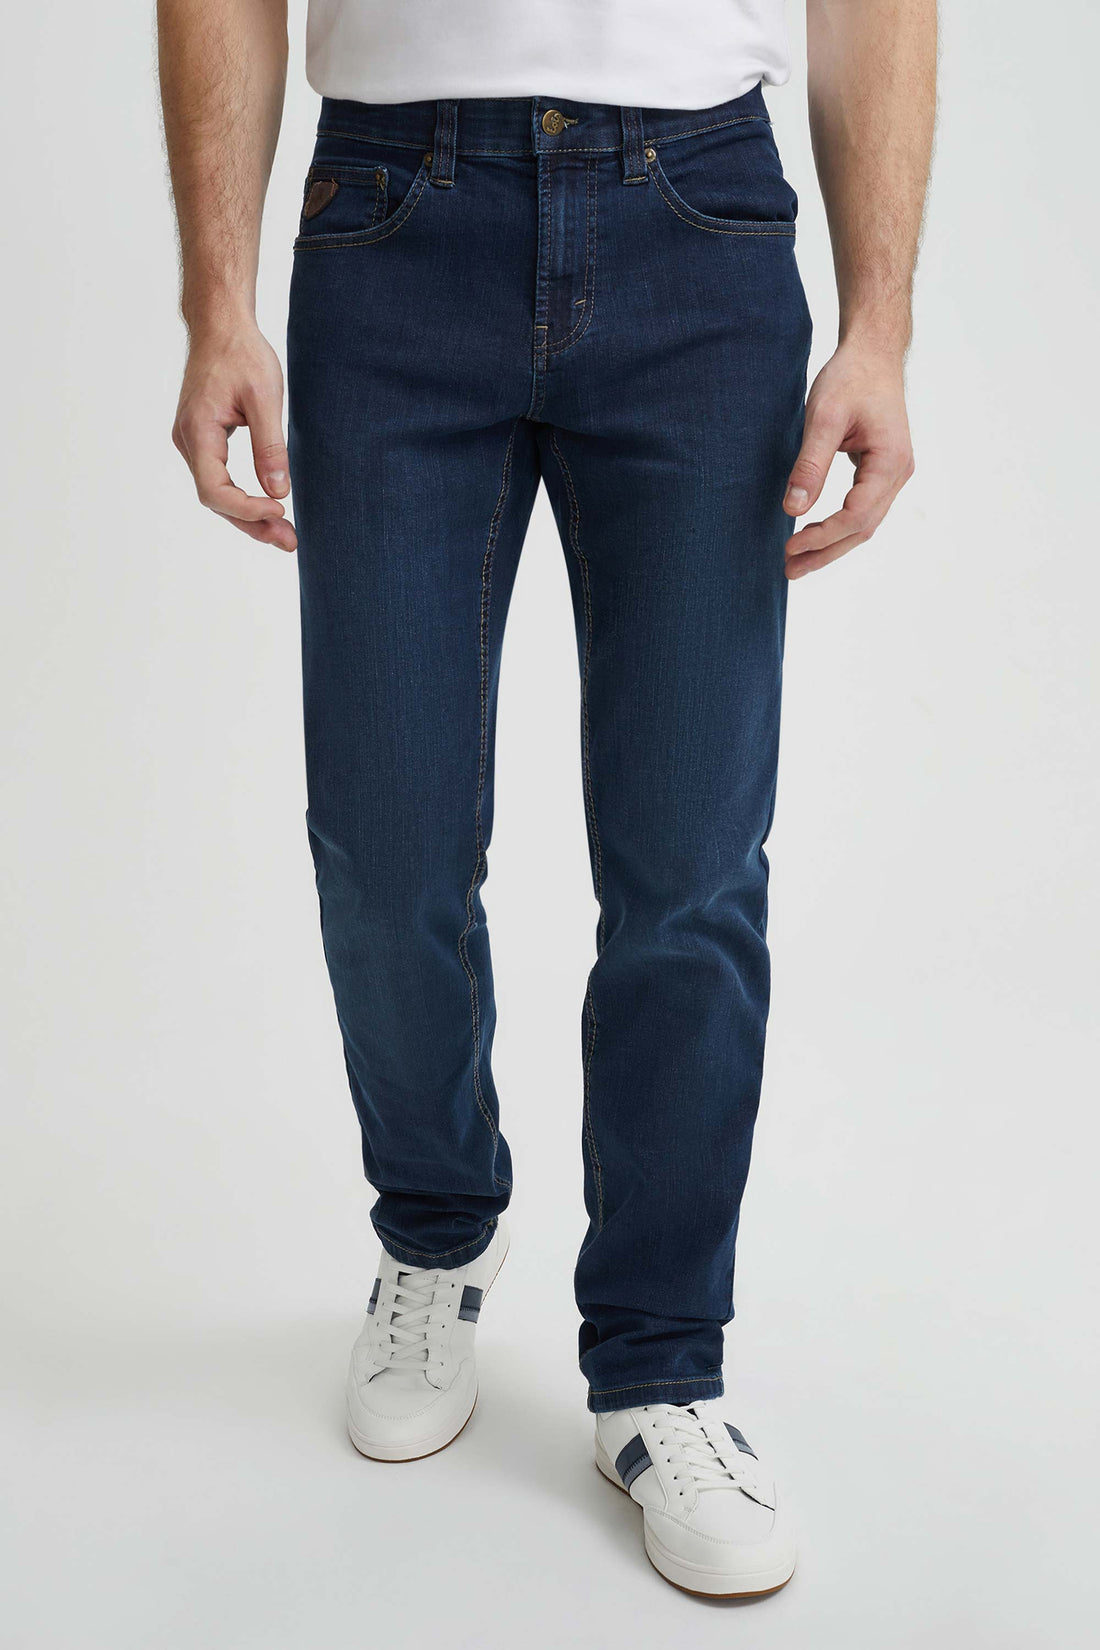 Blue Denim Men's Jeans